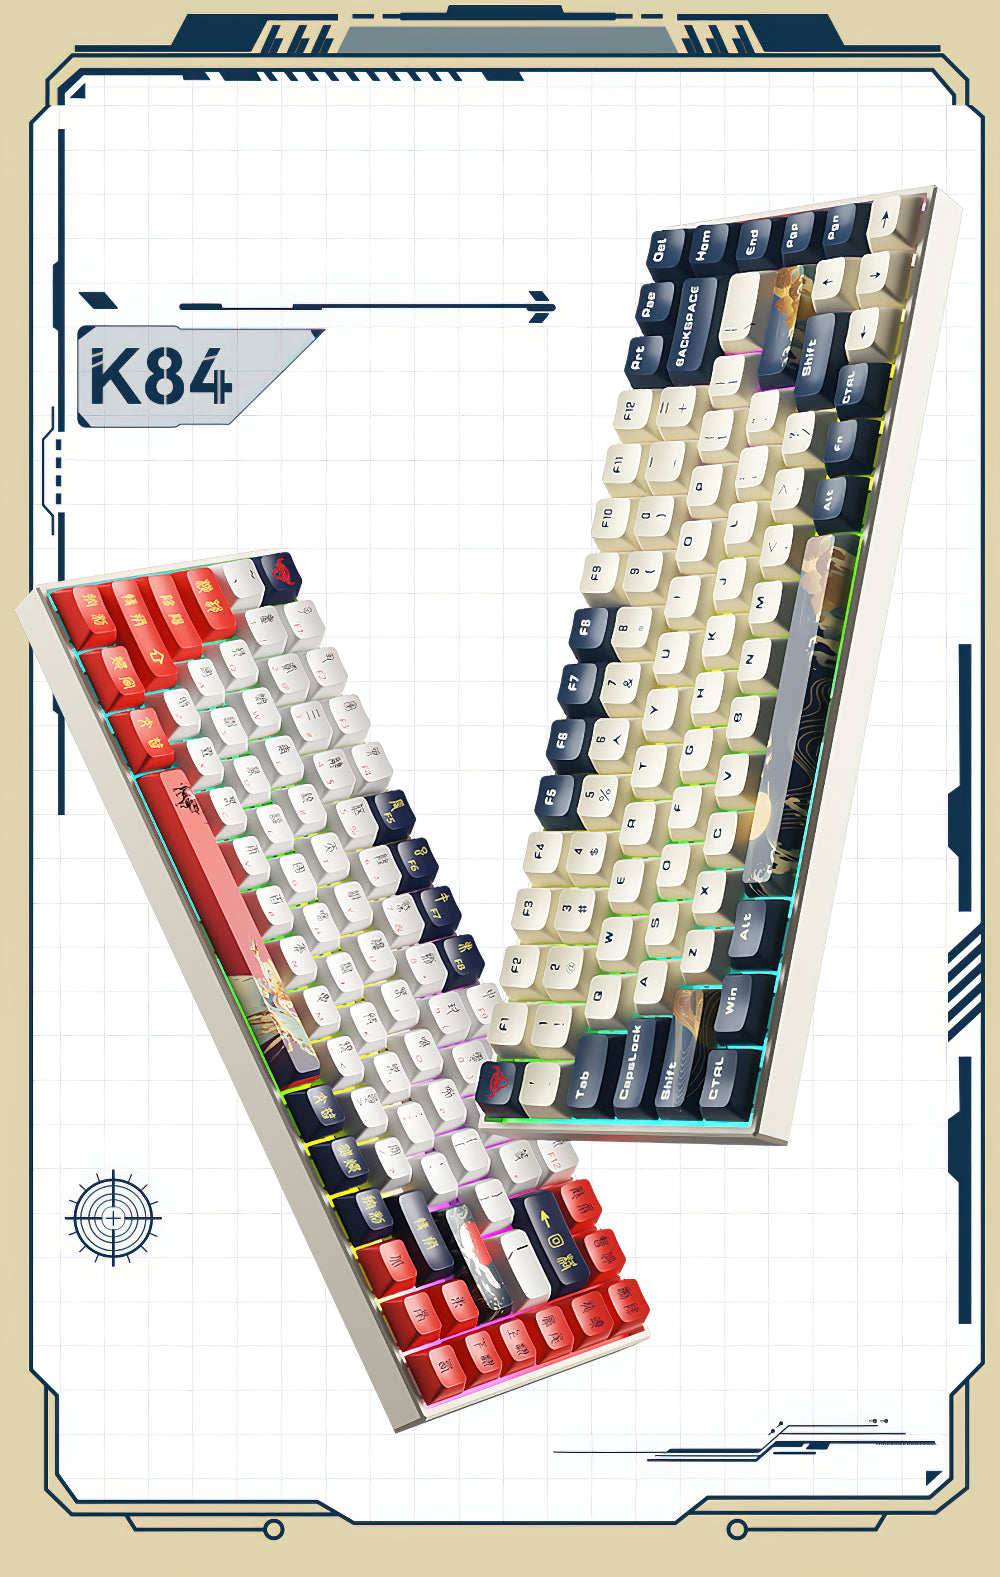 iBlancod K84 Hot-swappable Wireless 2.4G Bluetooth RGB Pbt 84 Keys Mechanical Gaming Keyboard